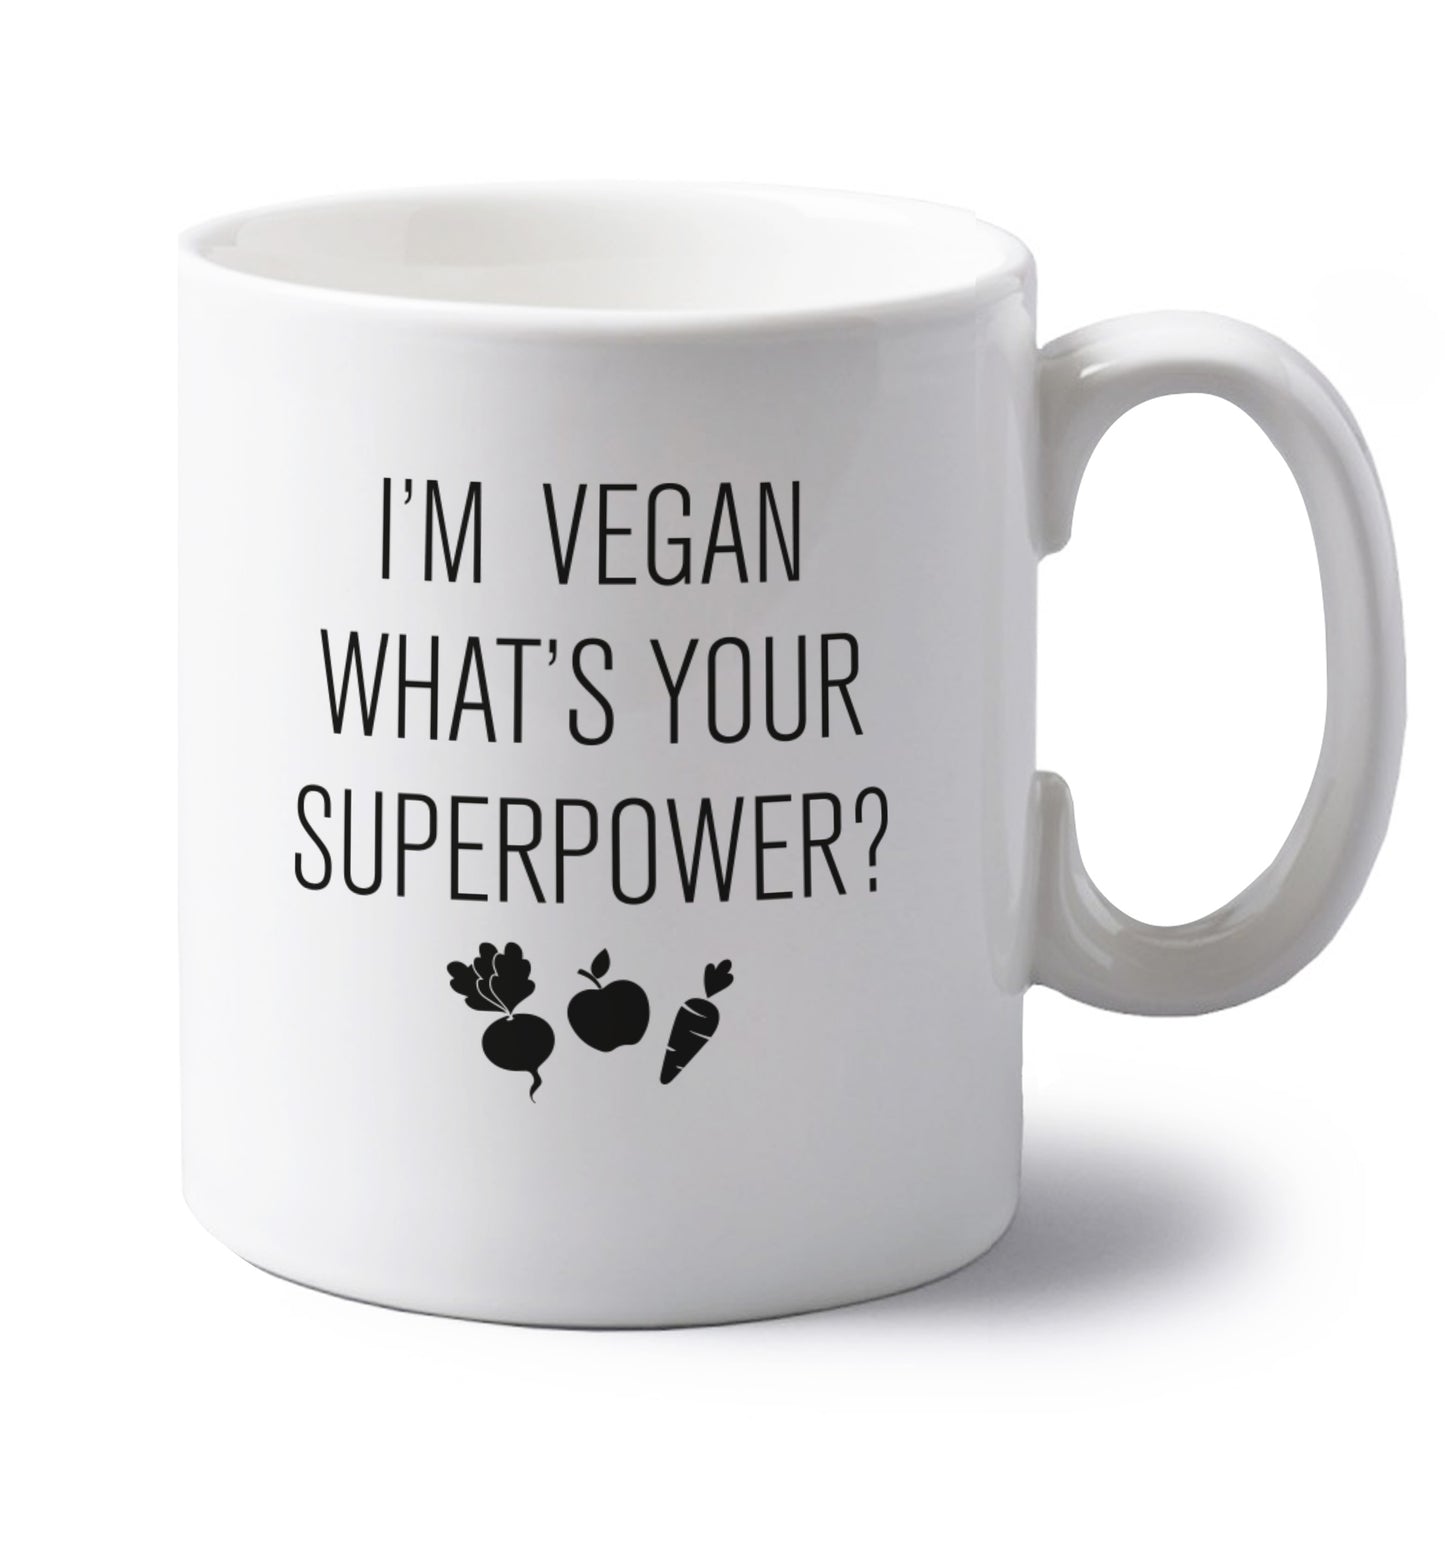 I'm Vegan What's Your Superpower? left handed white ceramic mug 